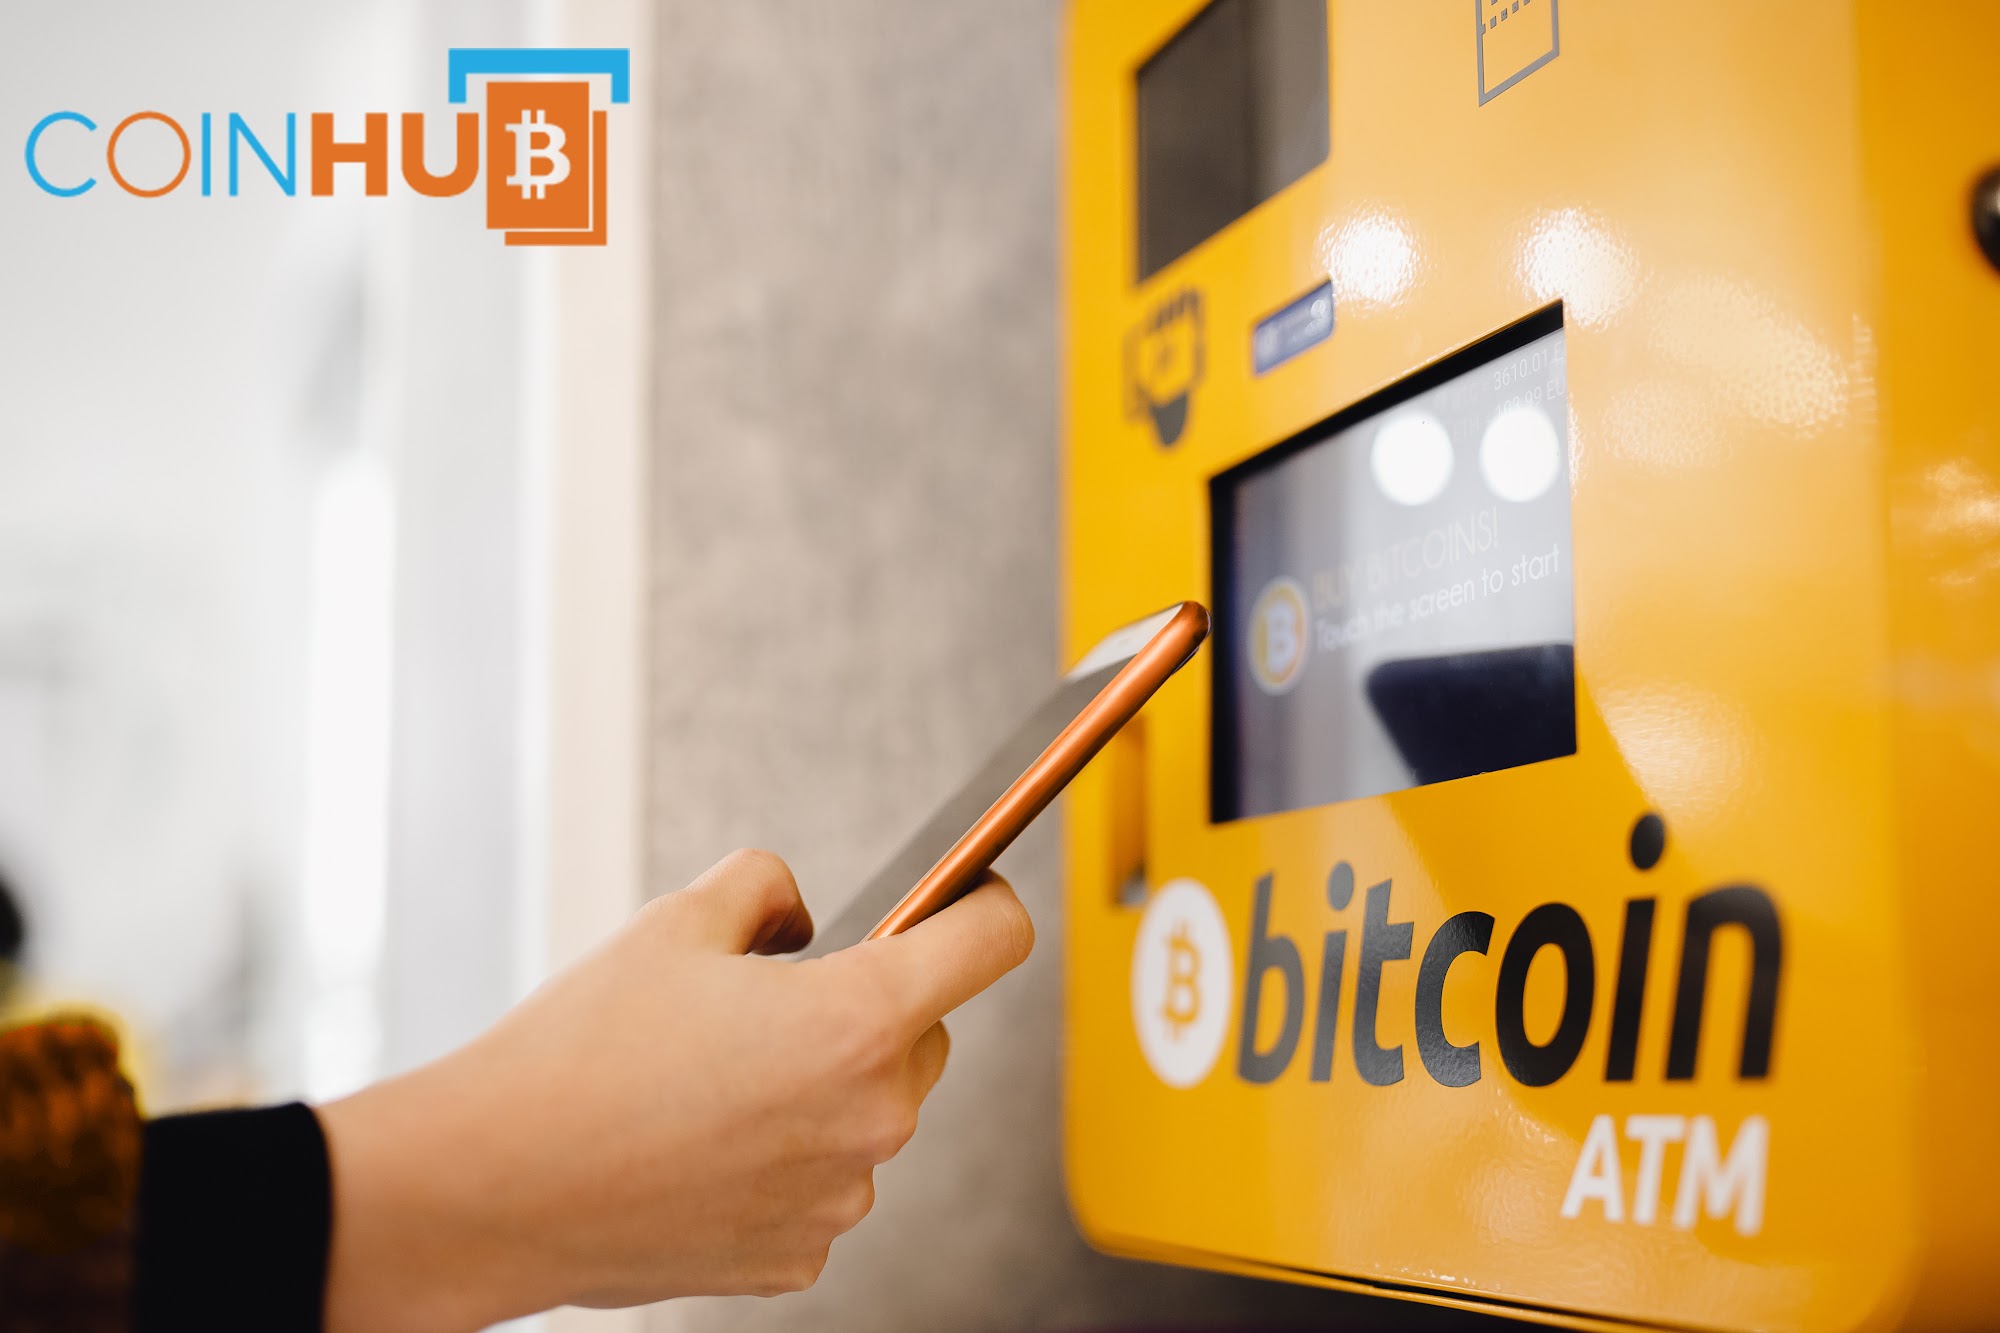 Bitcoin ATM Pittston - Coinhub